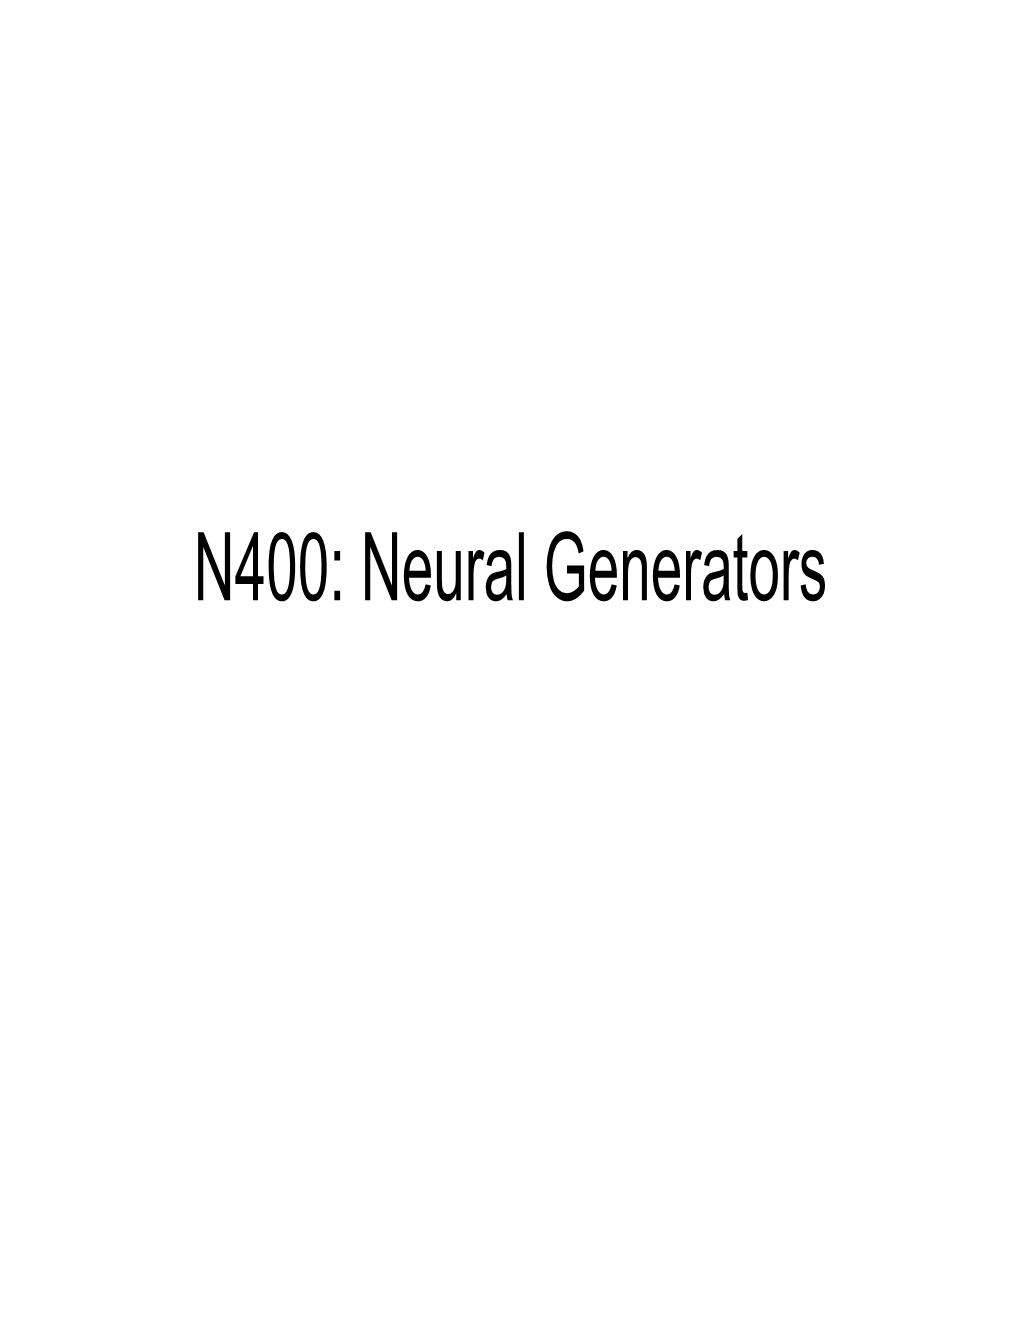 N400: Neural Generators Functional Significance